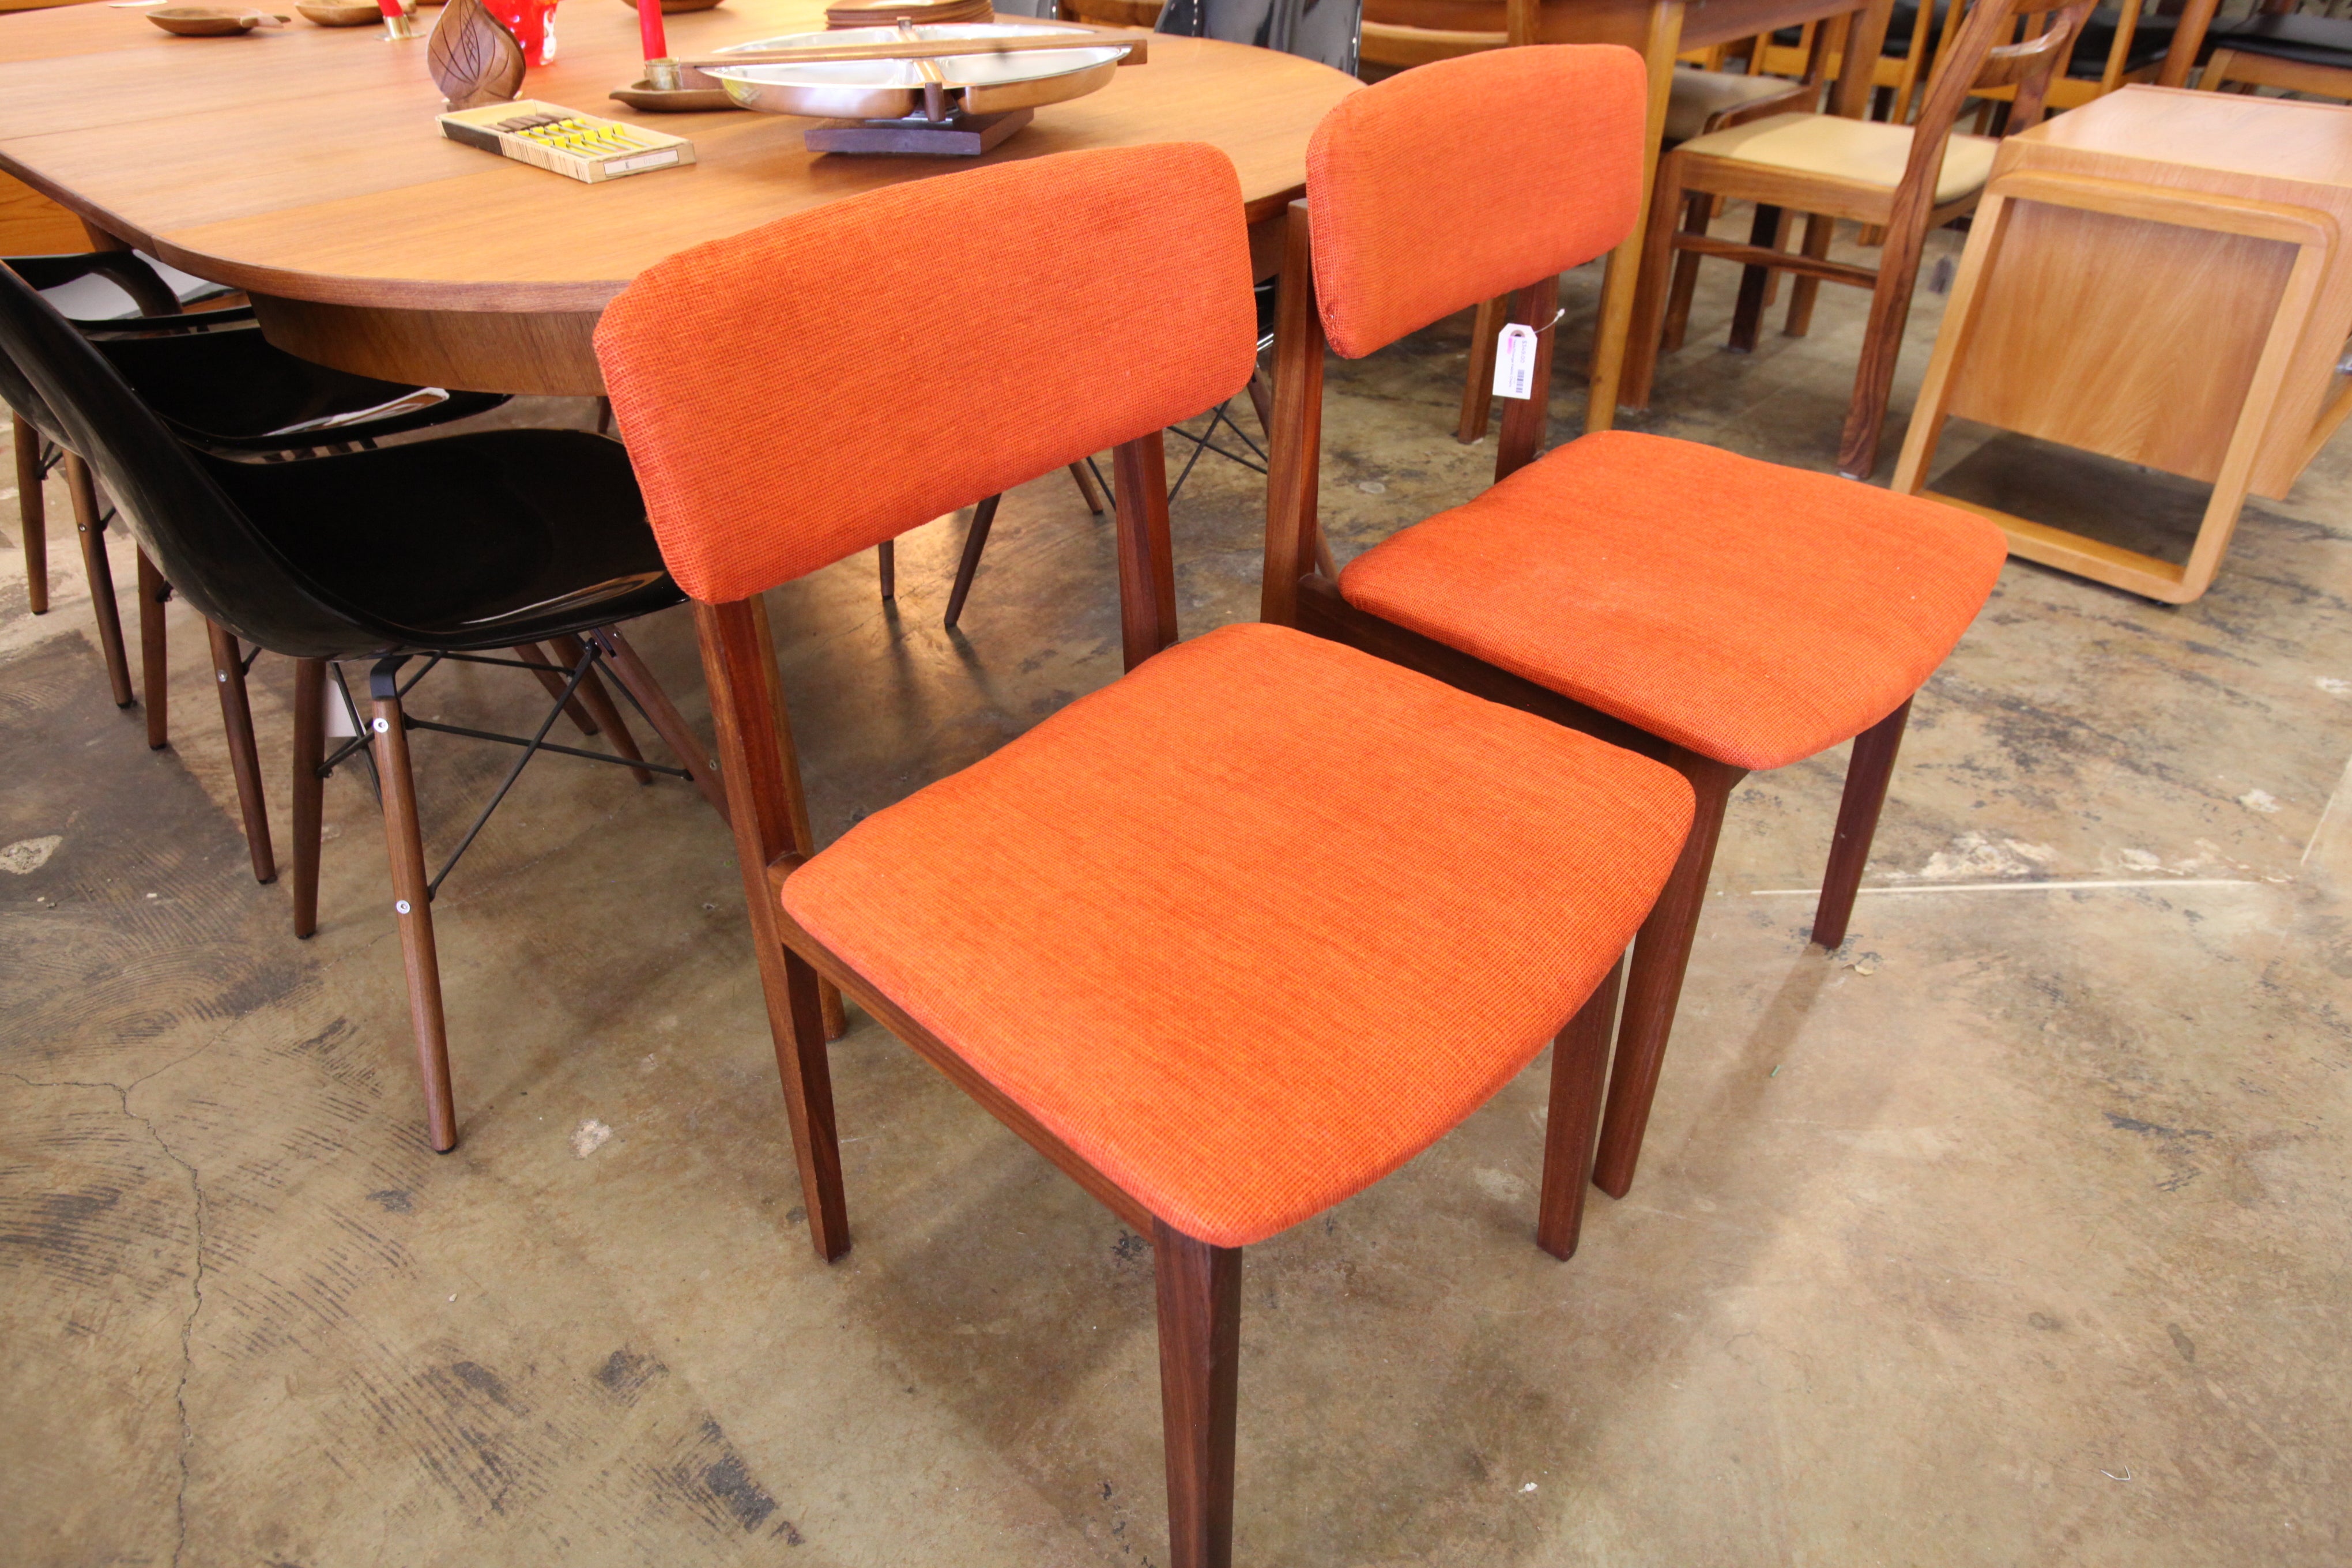 Set of 2 Vintage Teak/Walnut RS Associates Chairs (18"W x 31.5"H x 18.5"D)